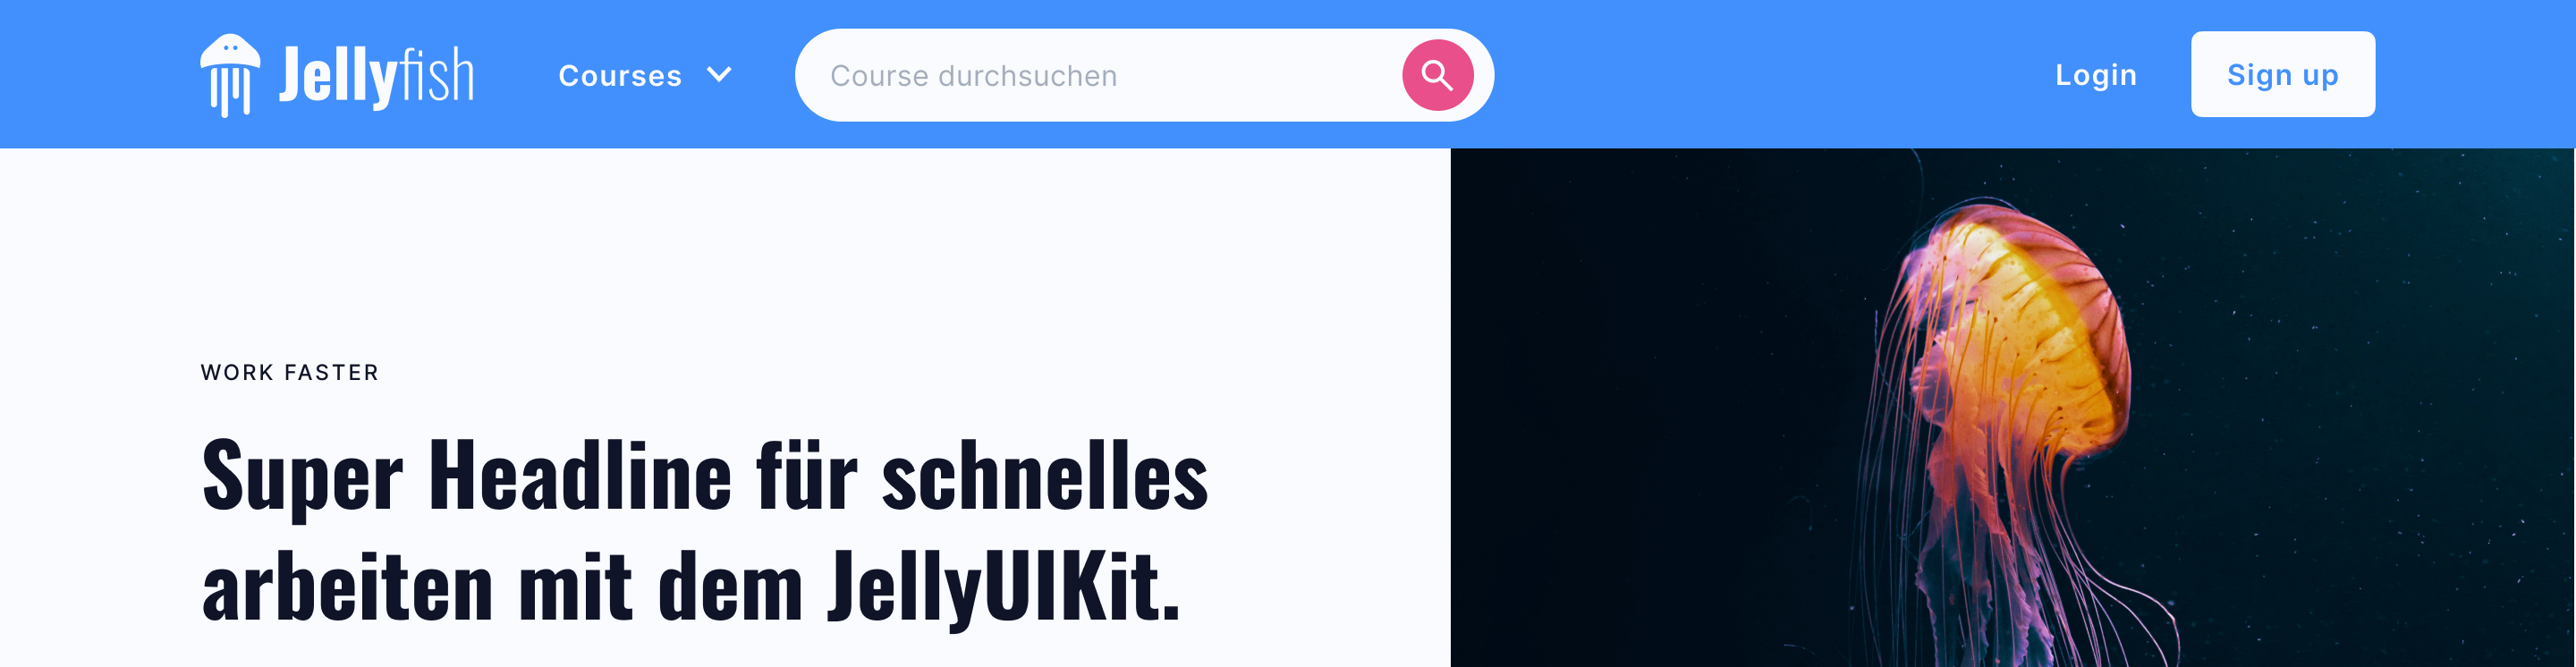 UI Kit Hero - Angelika Brand Illustratorin  Ui / Ux Designerin aus München